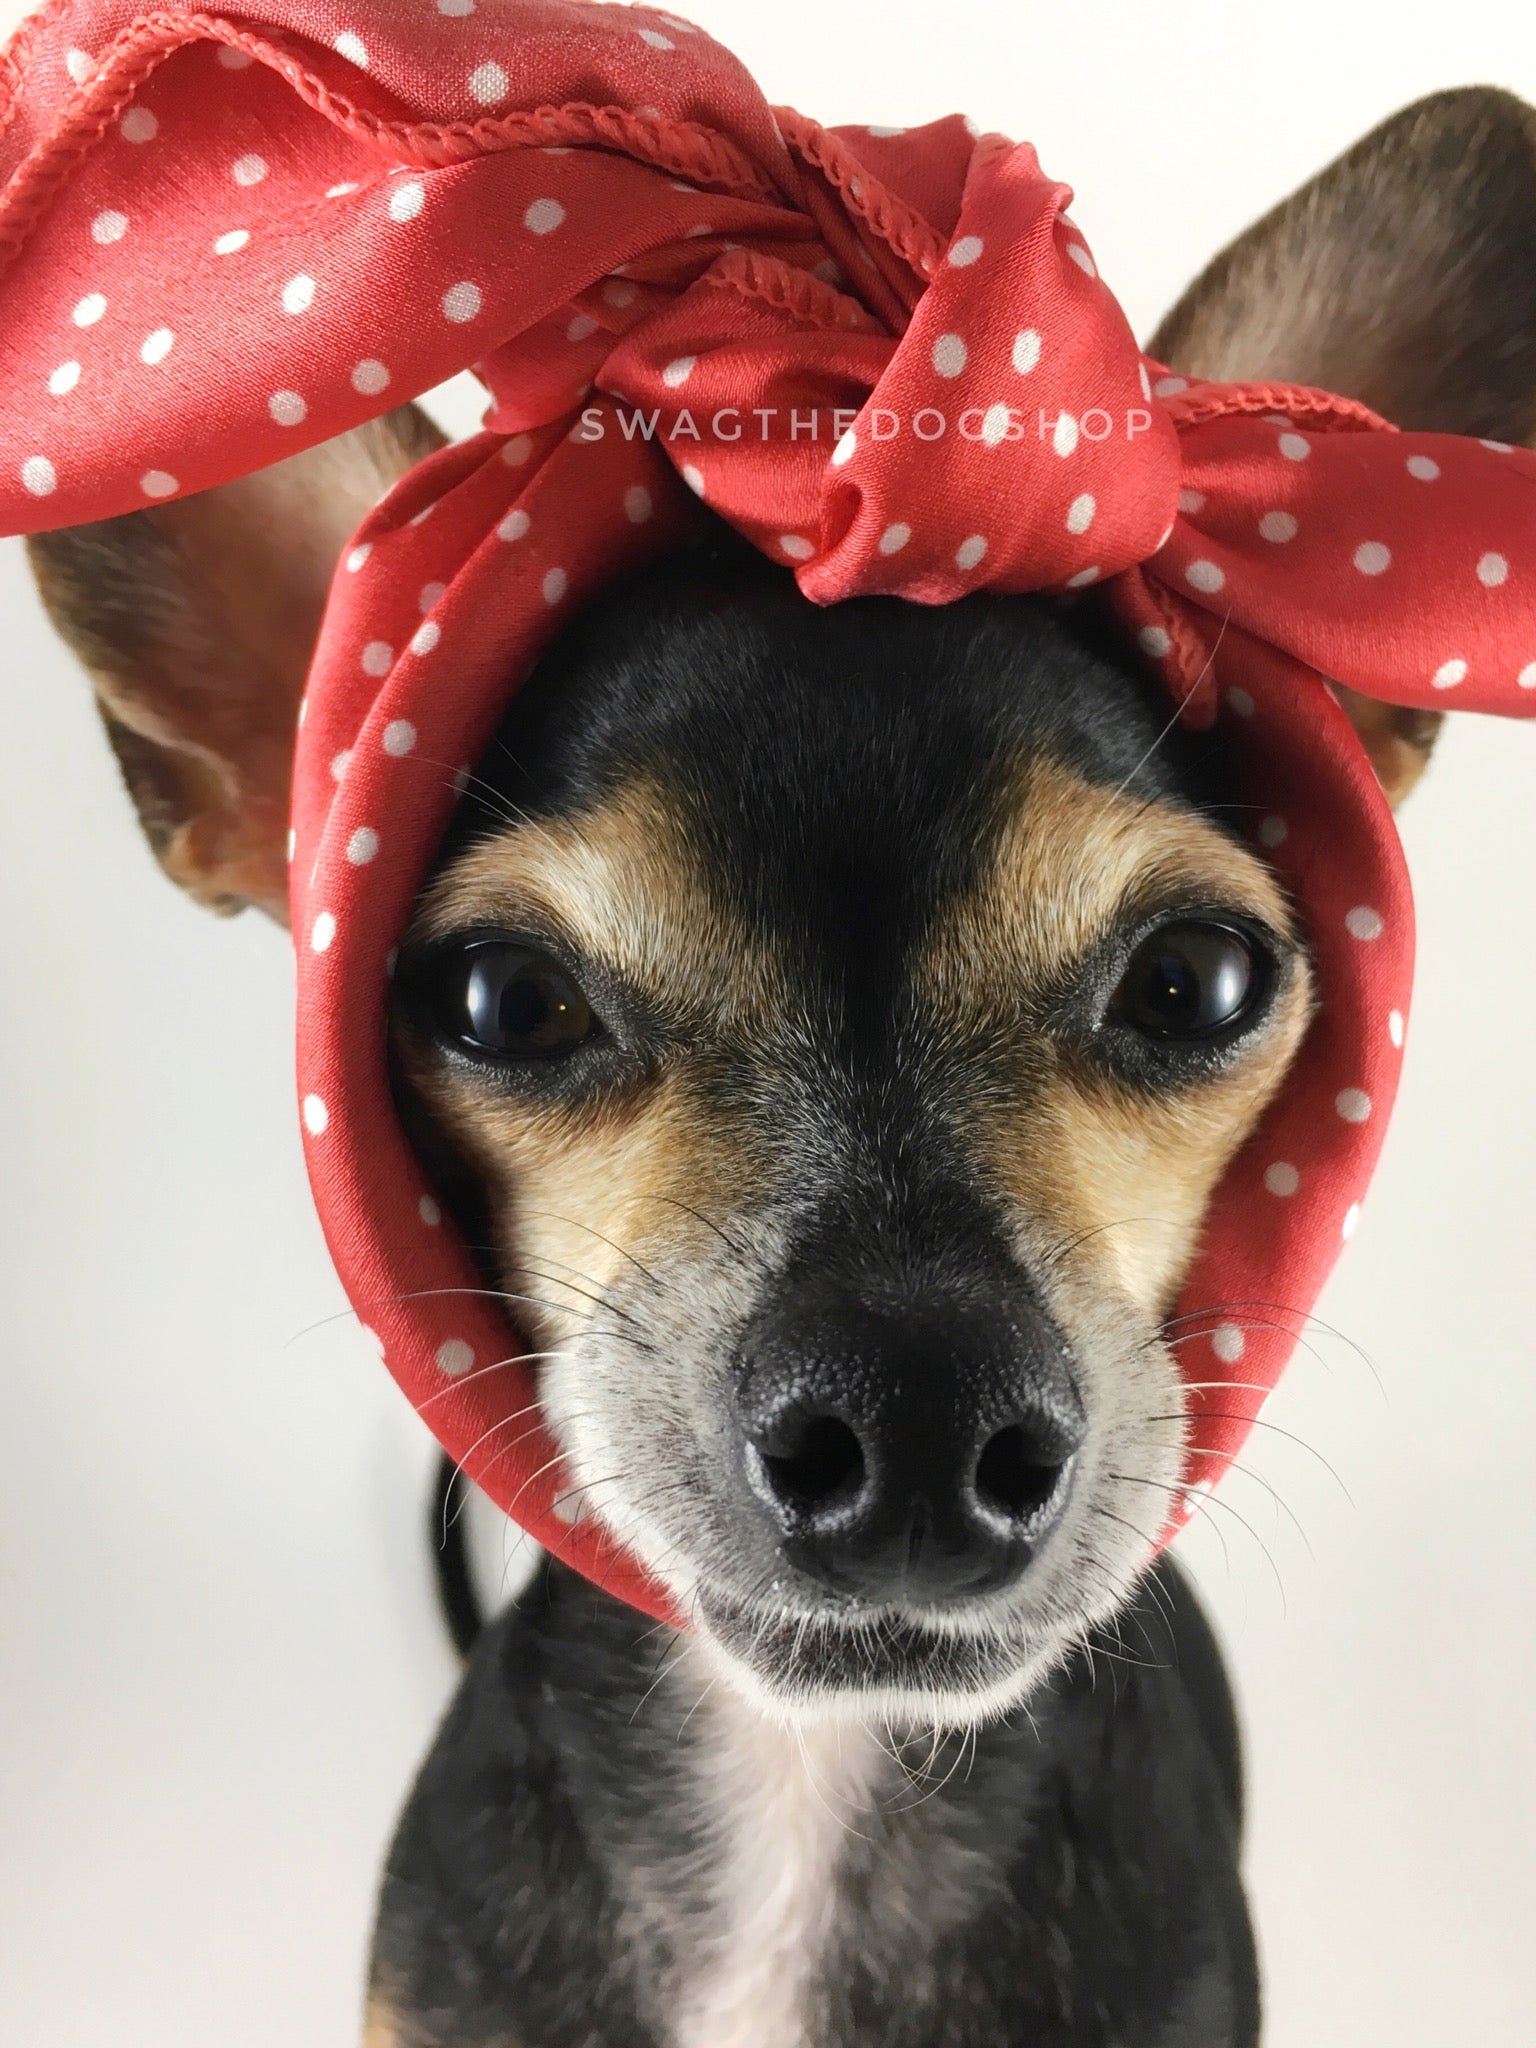 Polka Itty Bitty Coral Swagdana Scarf - Bust of Cute Chihuahua Wearing Swagdana Scarf as Headband. Dog Bandana. Dog Scarf.